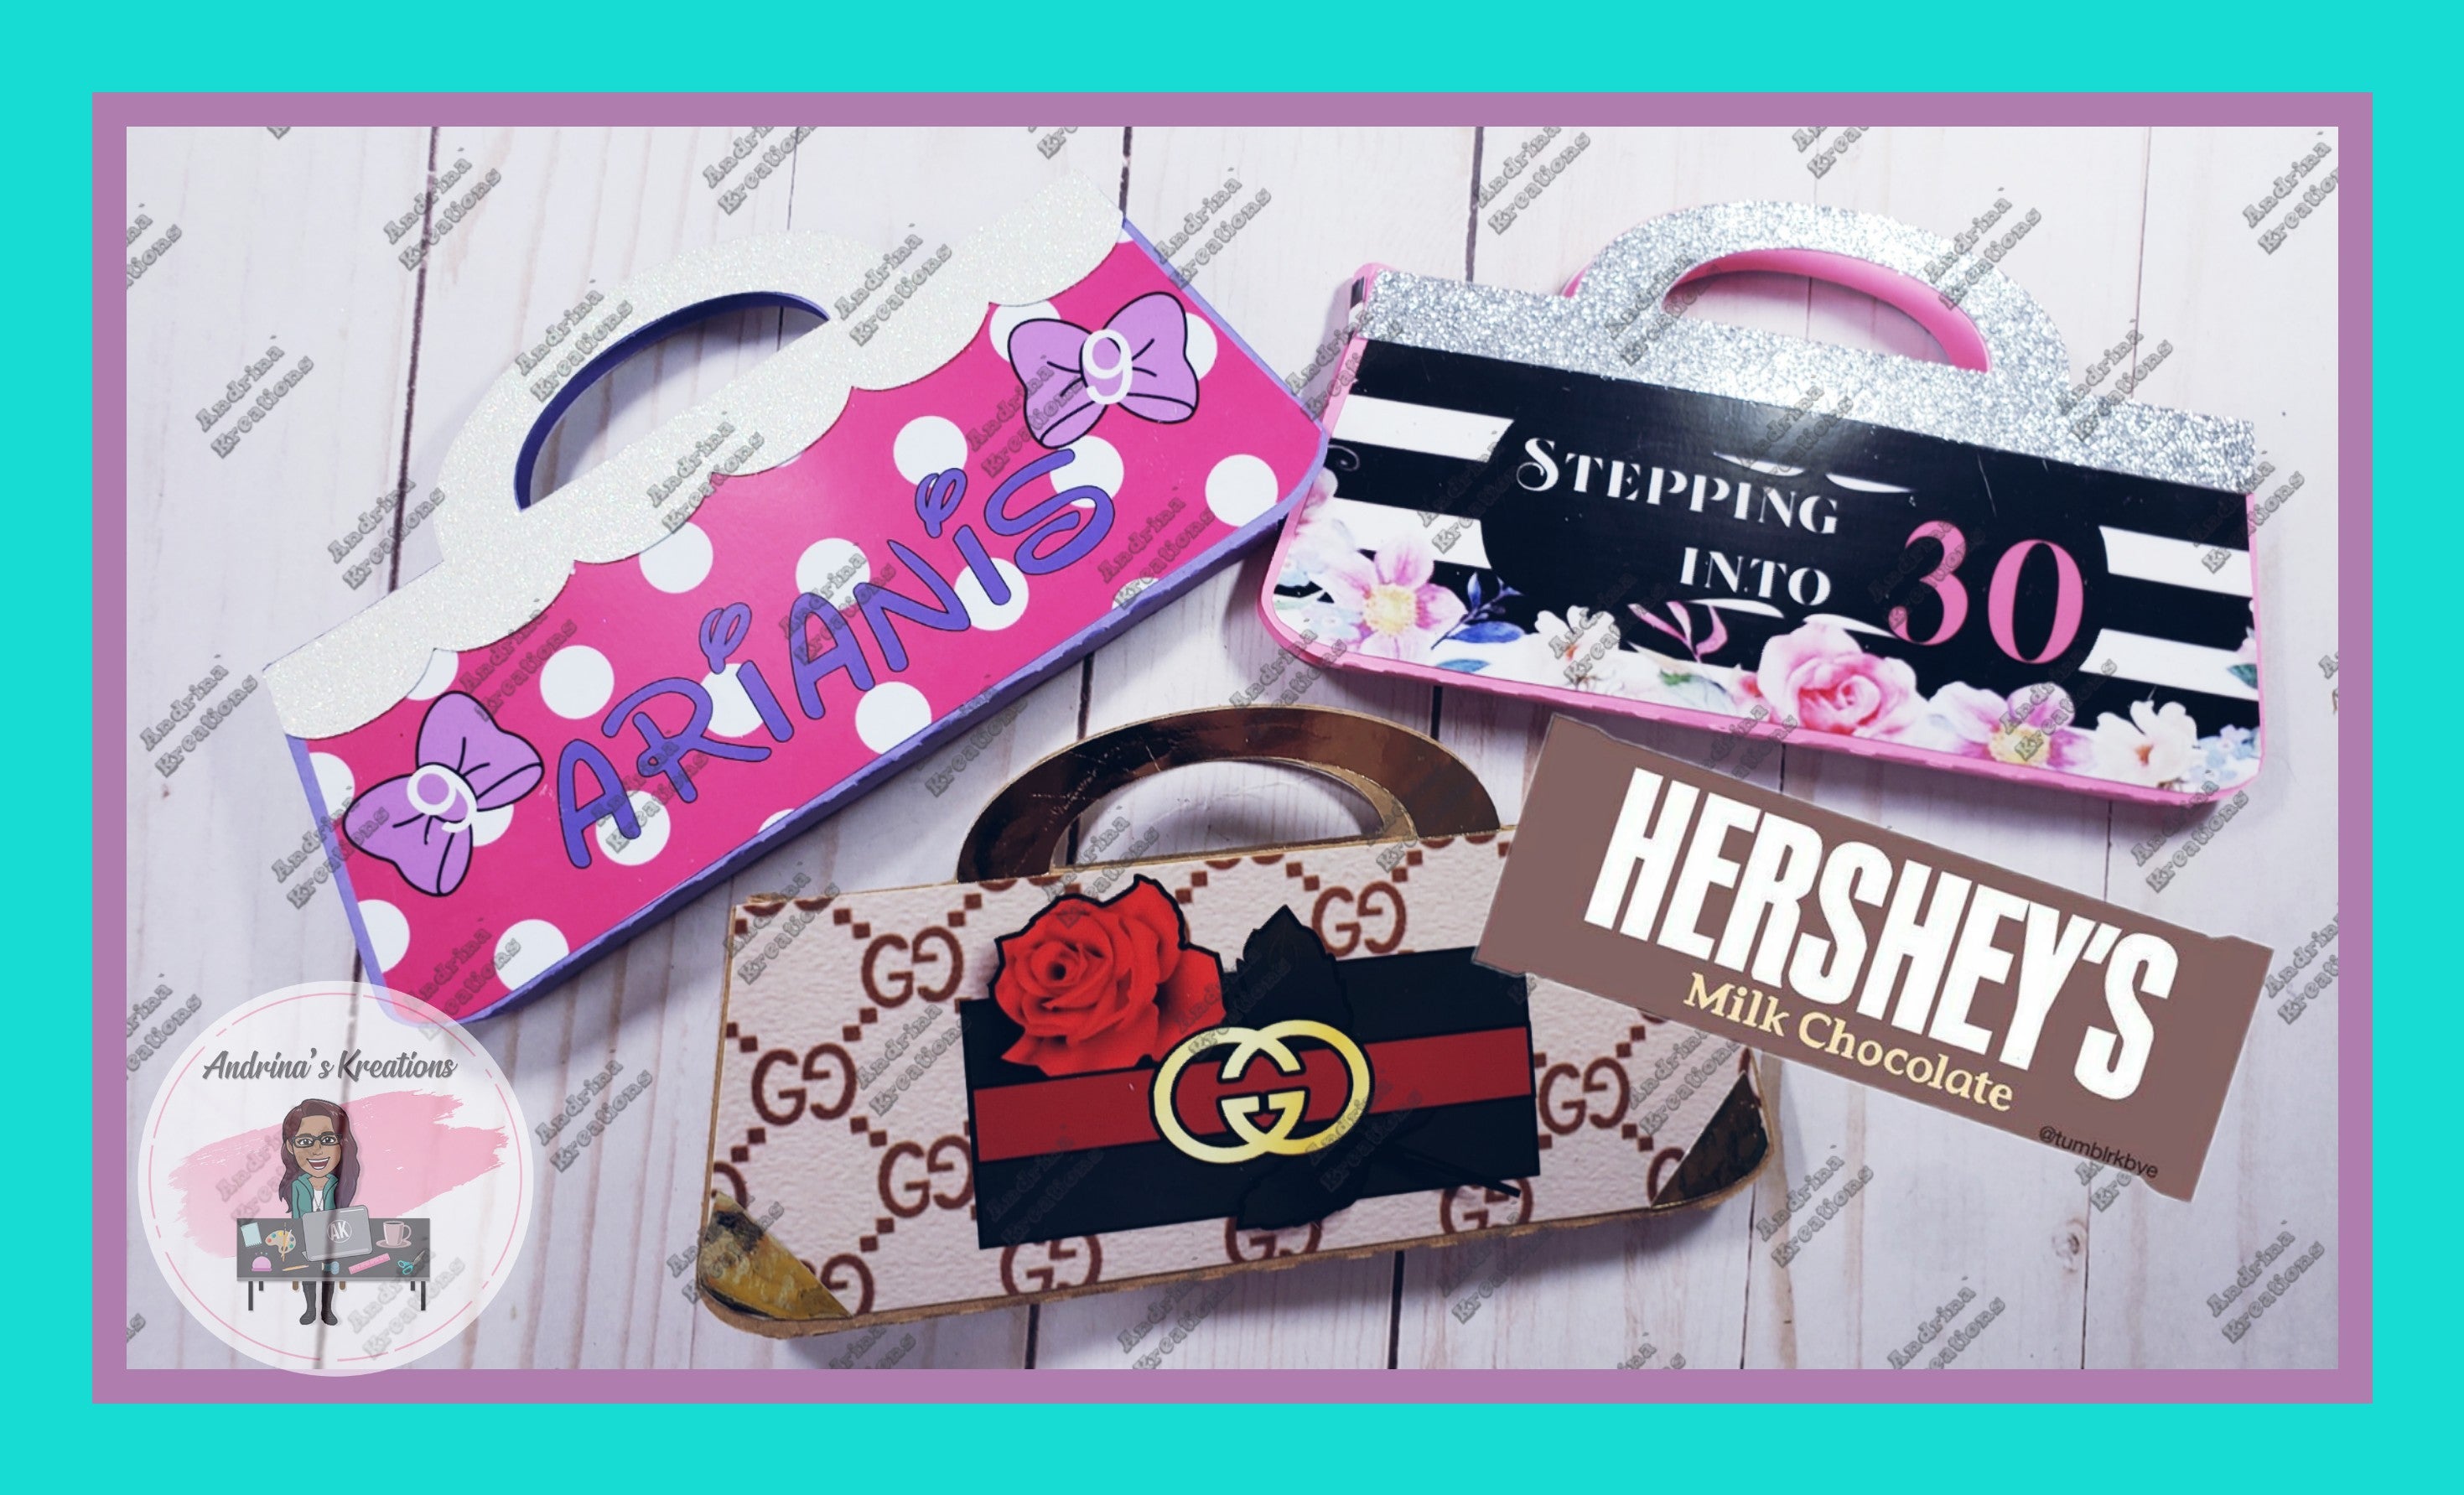 How to make a Hershey candy bar purse with Cricut #cricut #diy #diycrafts # purse #hershey - YouTube